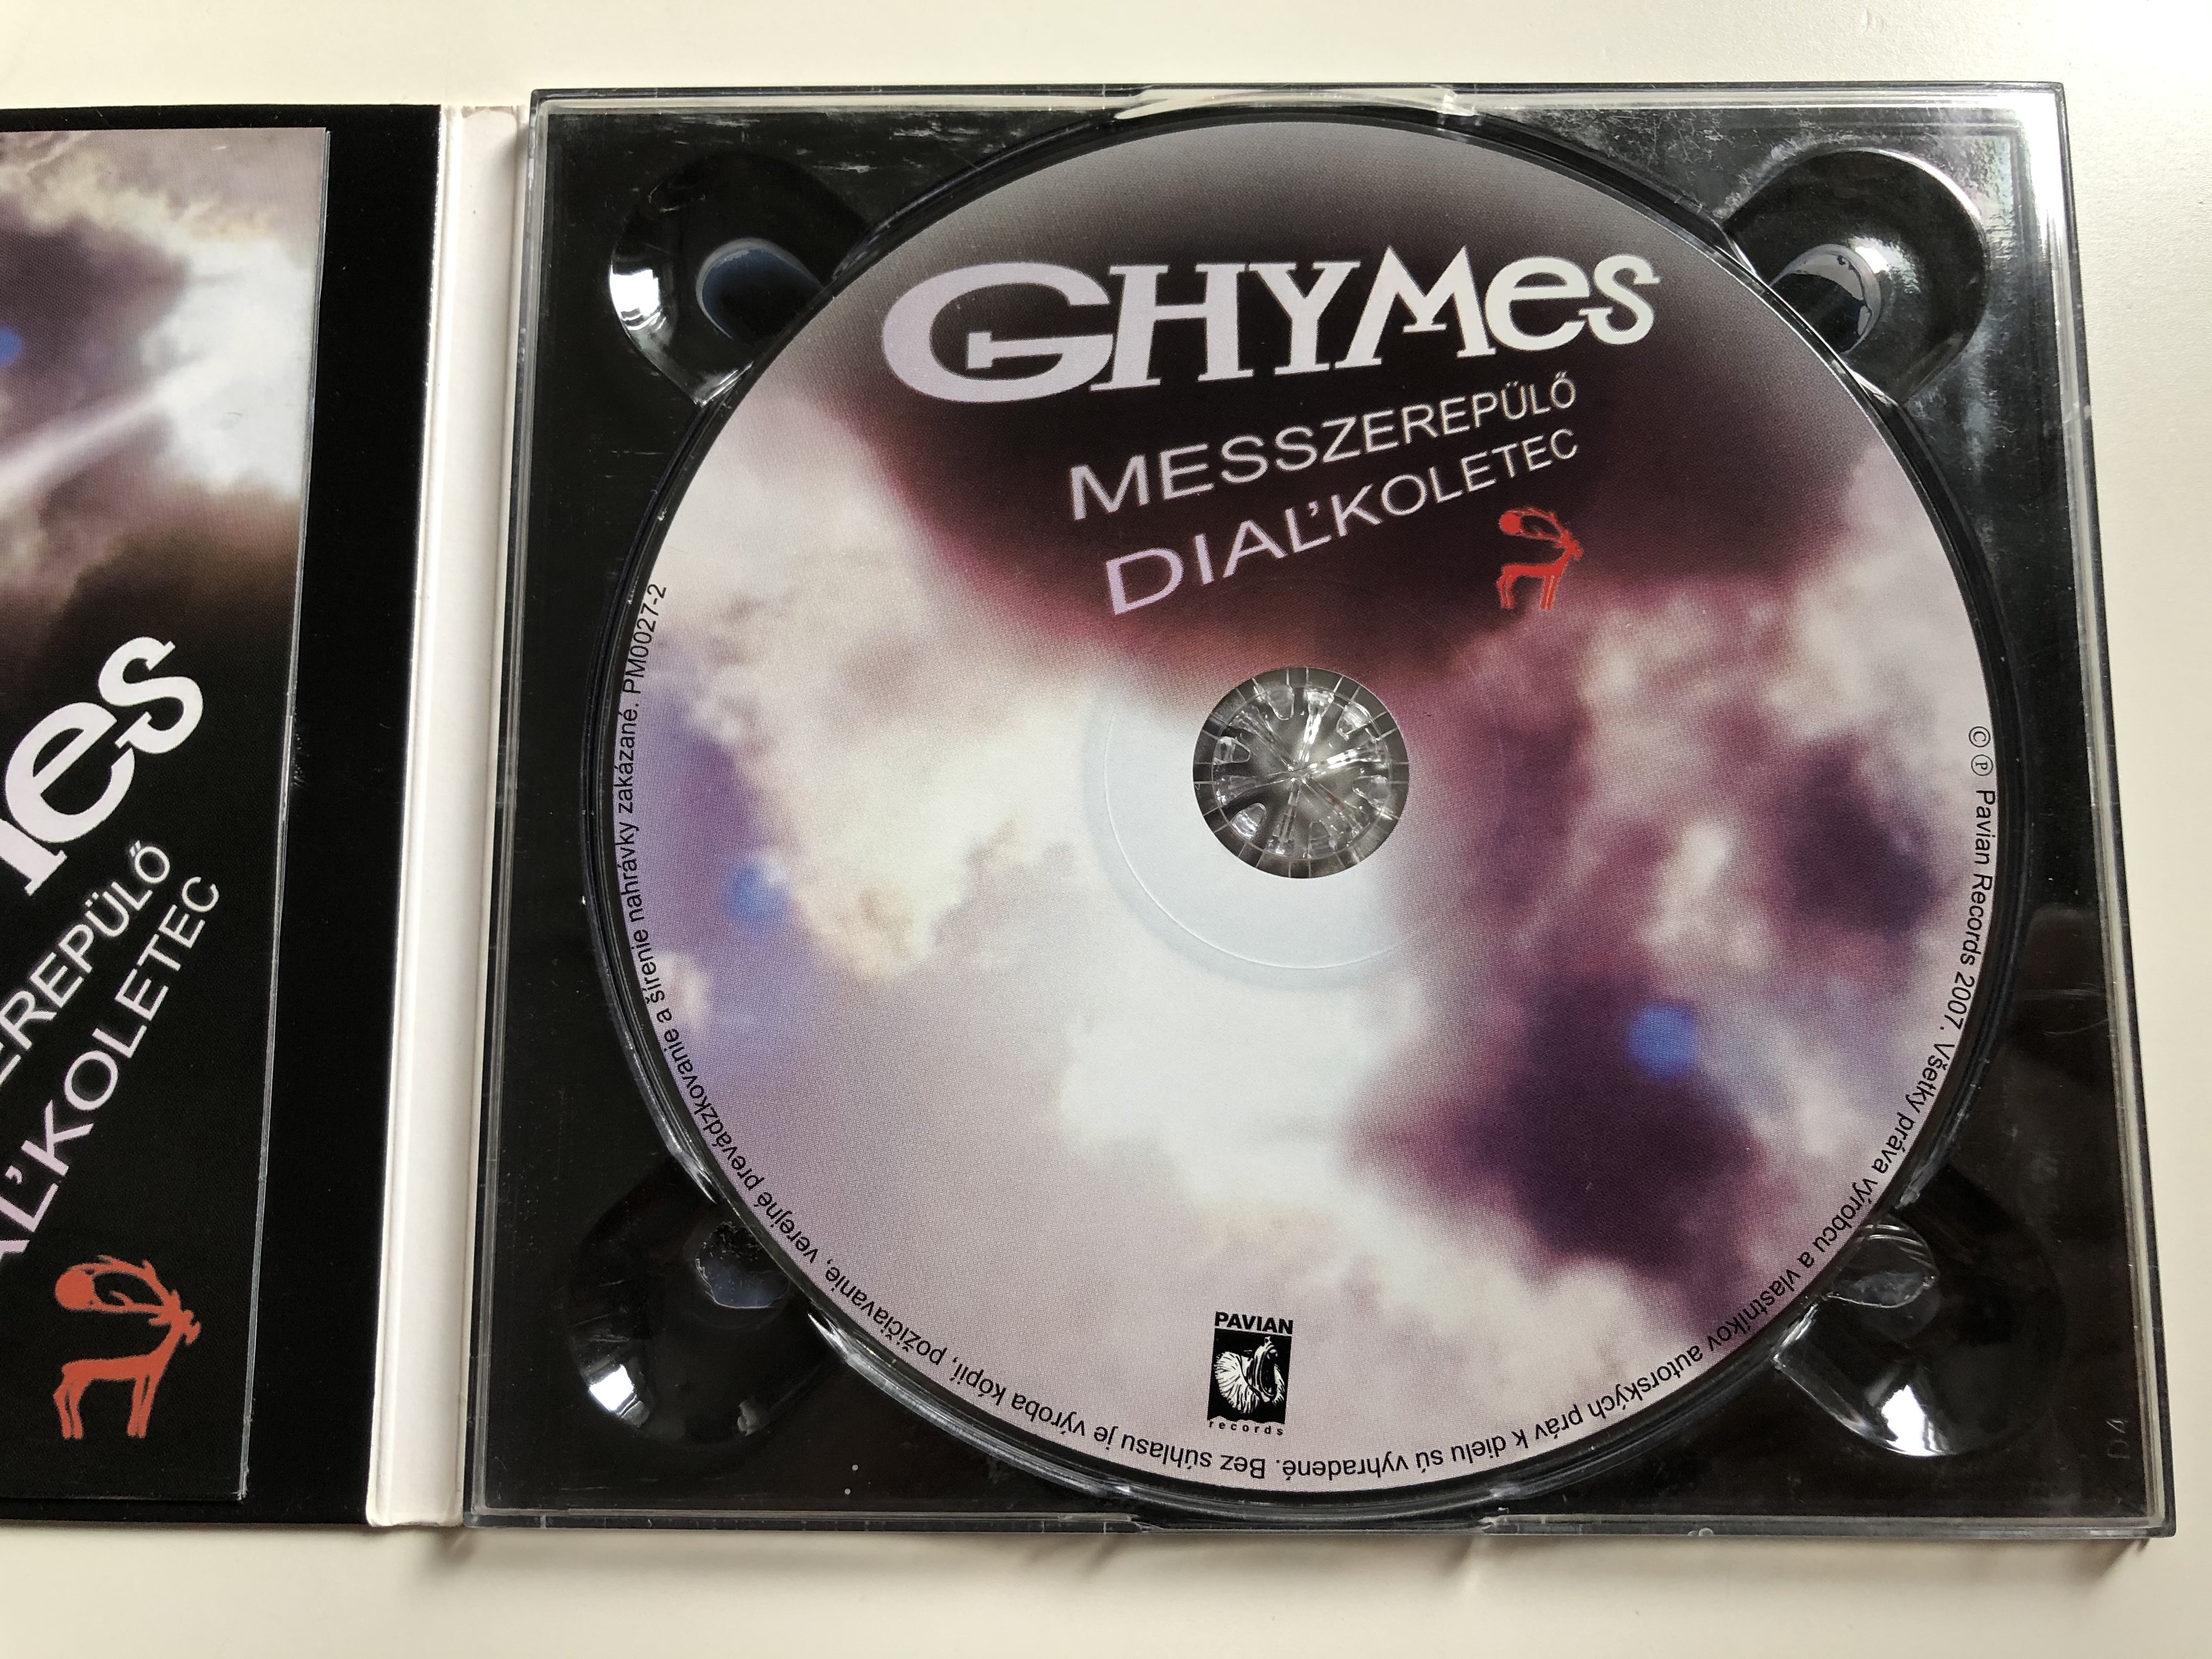 ghymes-messzerep-l-dia-koletec-pavian-records-audio-cd-2007-pm0027-2-2-.jpg